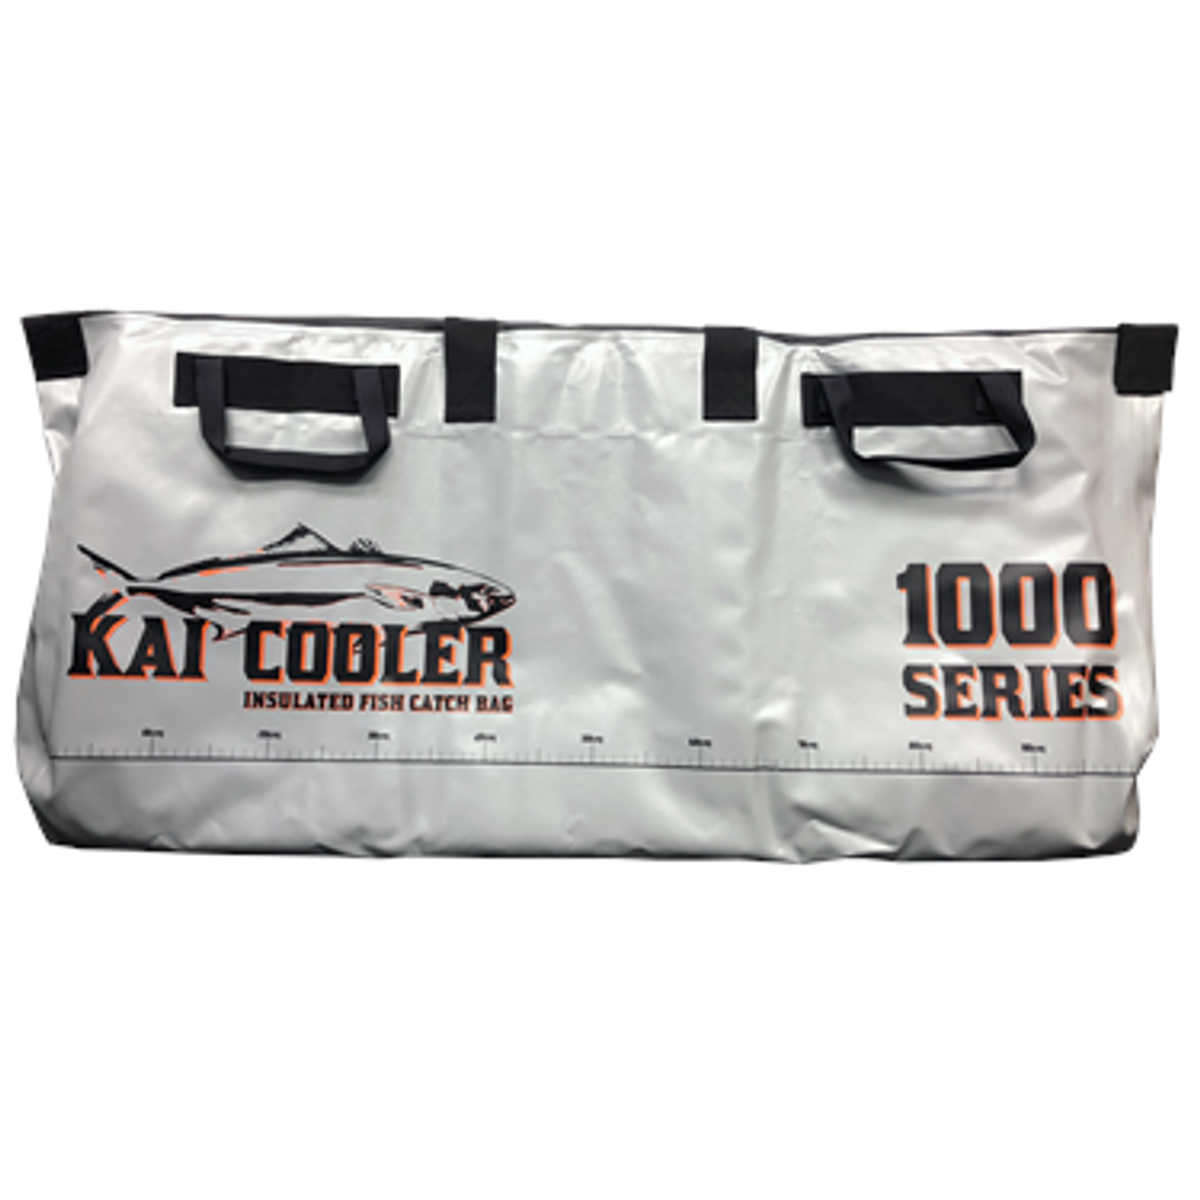 Kai Cooler Insulated Fish Catch Bag 1000